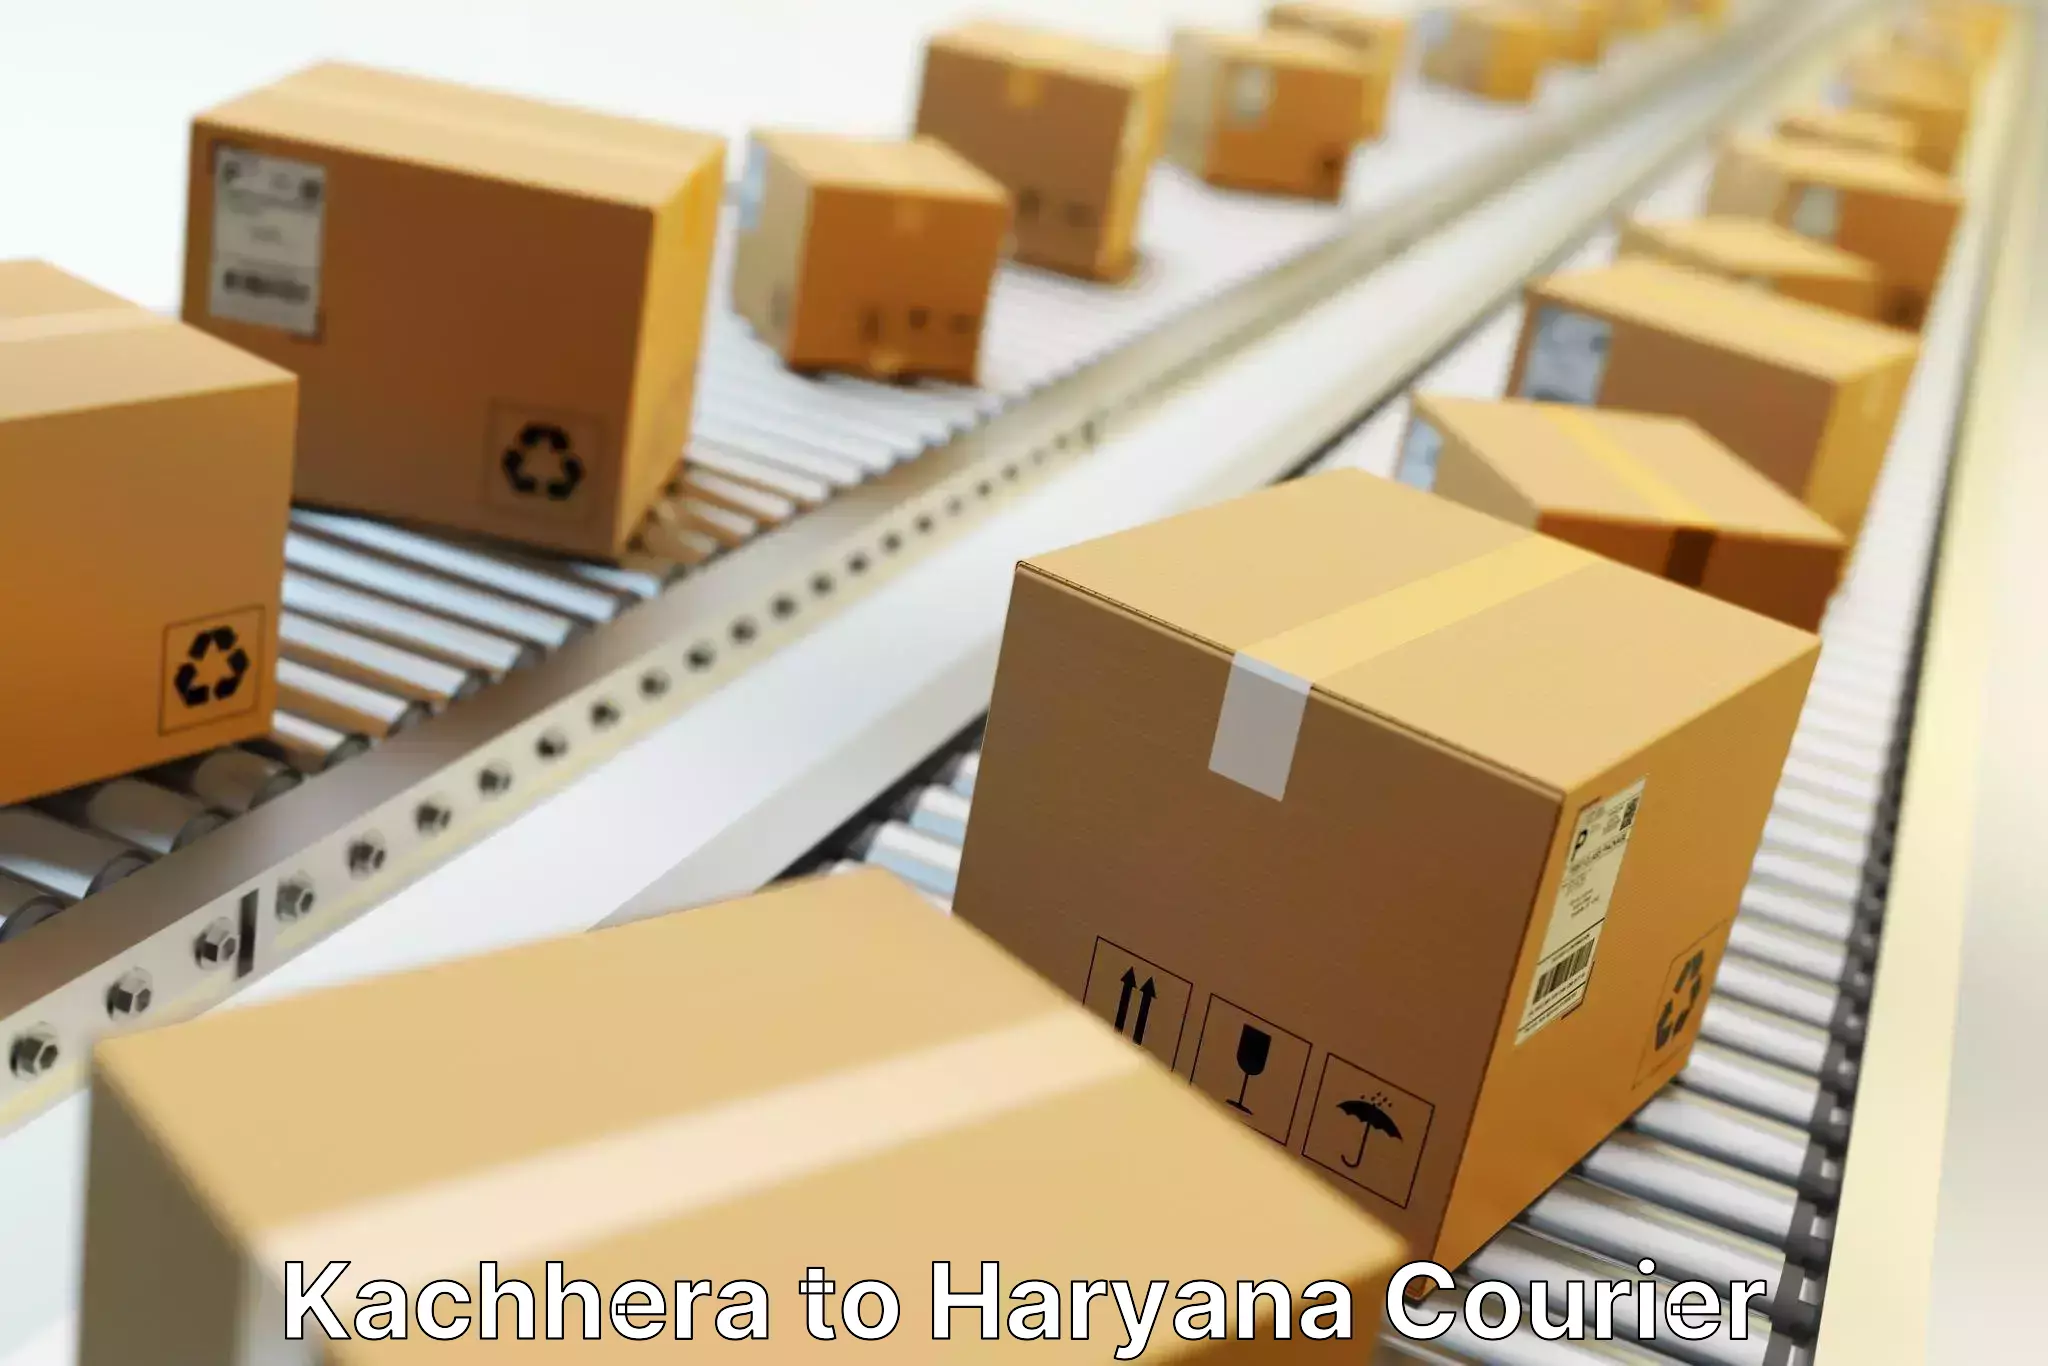 Express delivery capabilities Kachhera to Panchkula